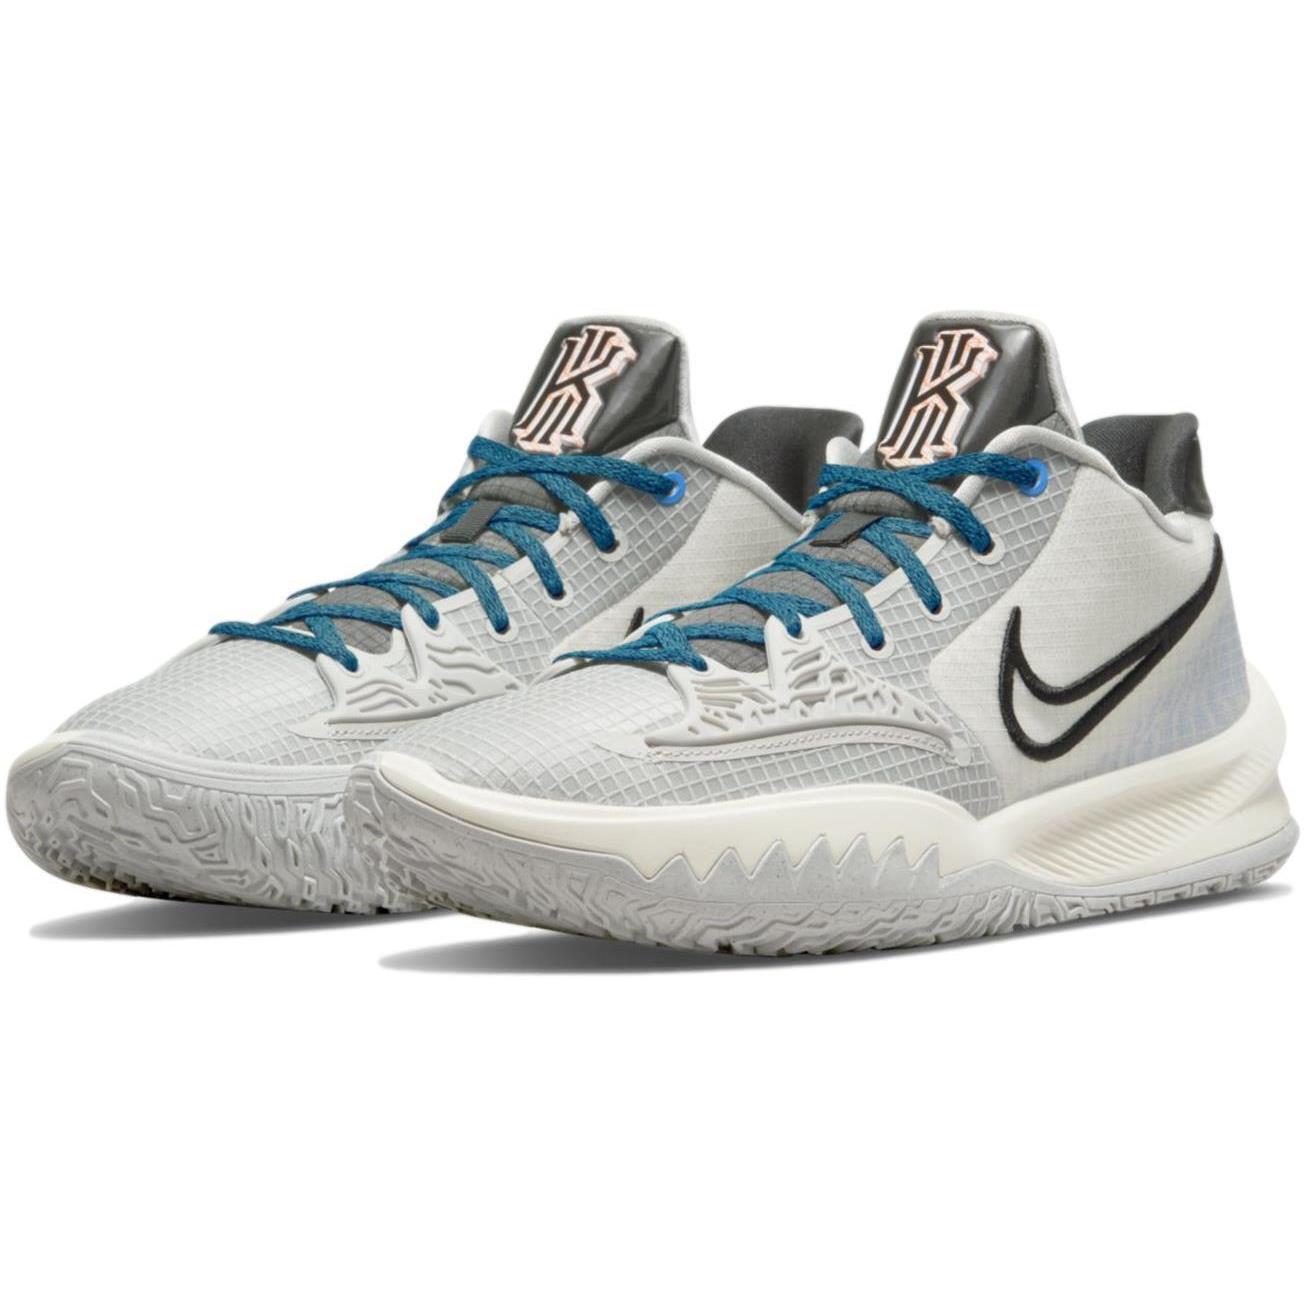 Nike Kyrie Low 4 `grey Fog Sapphire` Men`s Basketball Shoes CW3985-004 - Grey Fog/Black-Sapphire